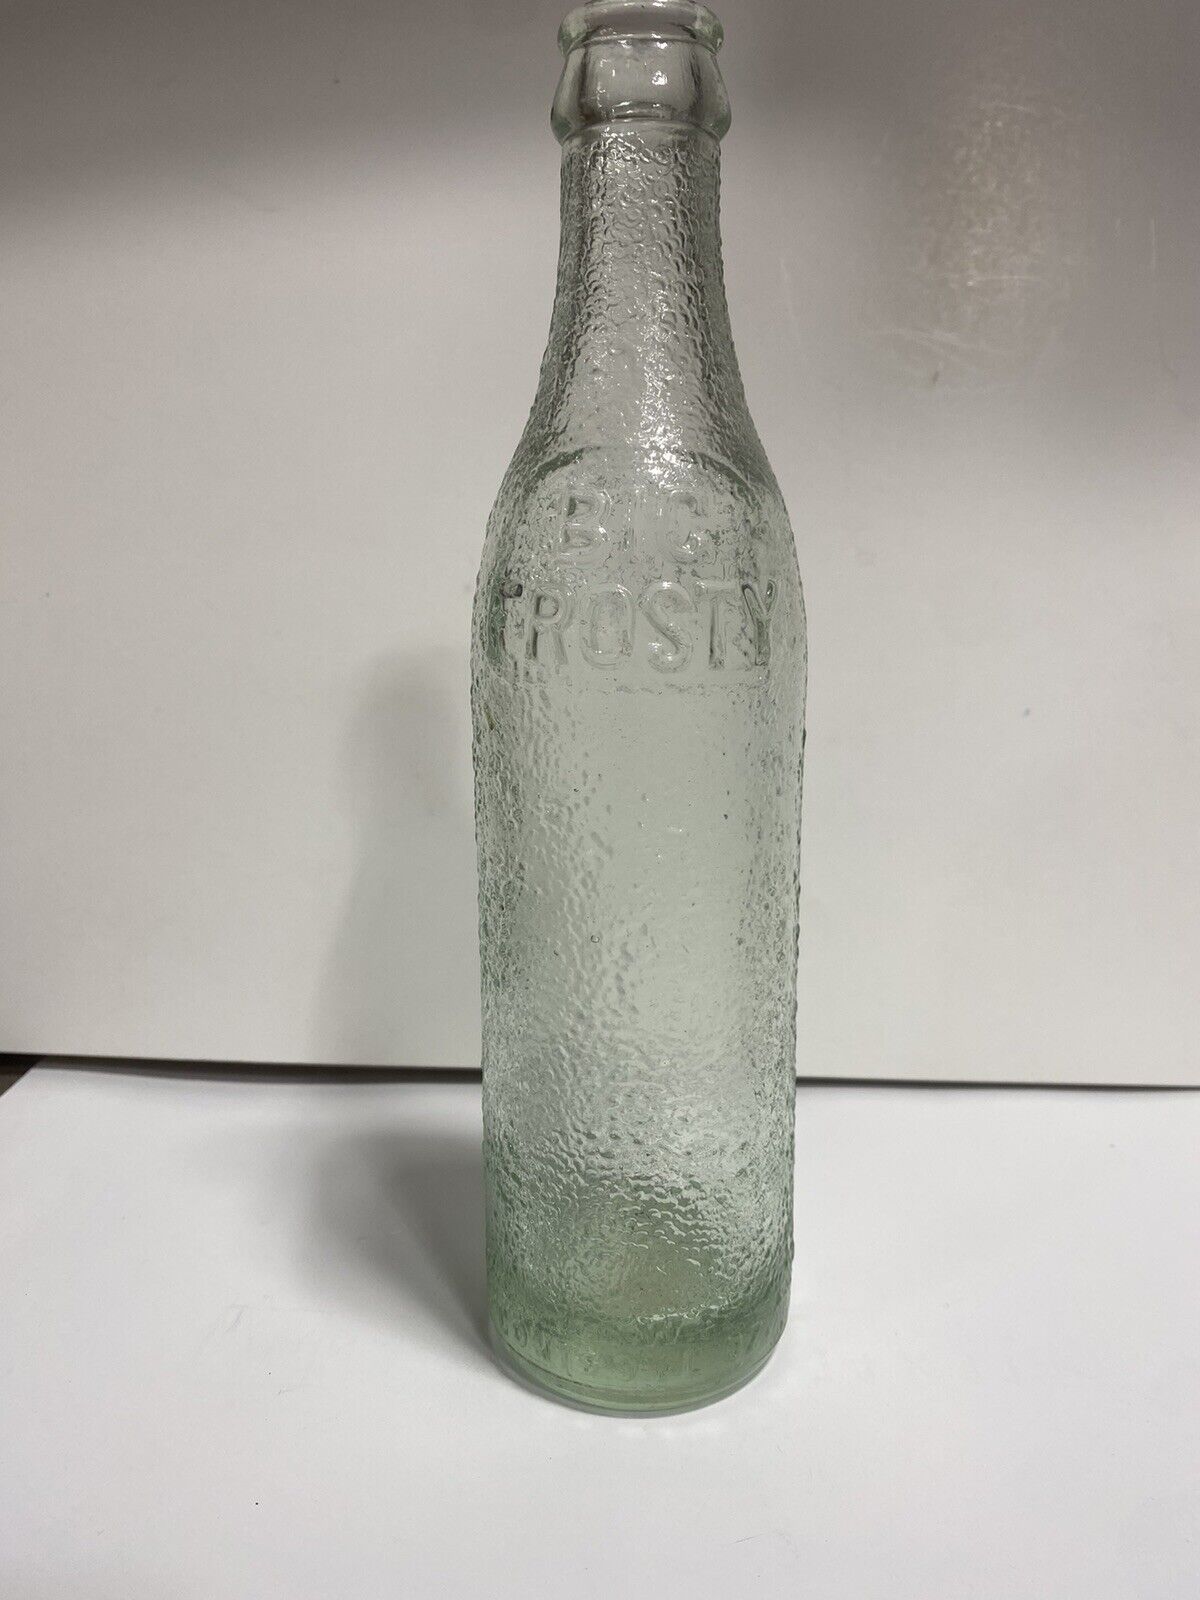 Athens Ga Big Frosty Soda Bottle Georgia